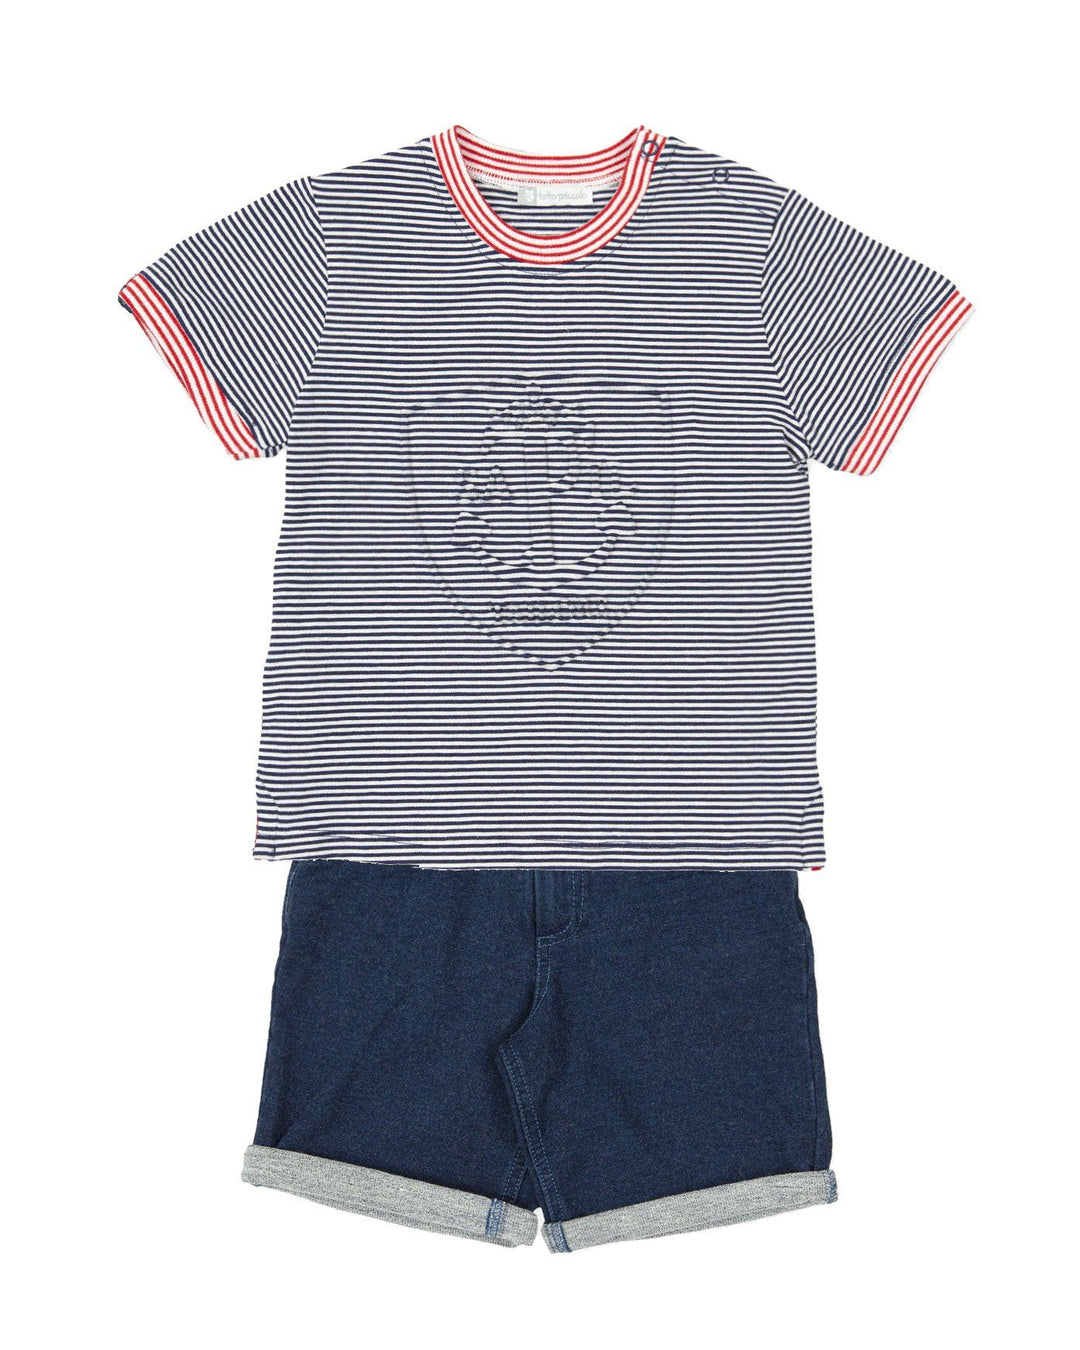 Tutto Piccolo "Elliott" Navy Striped T-Shirt & Shorts | Millie and John